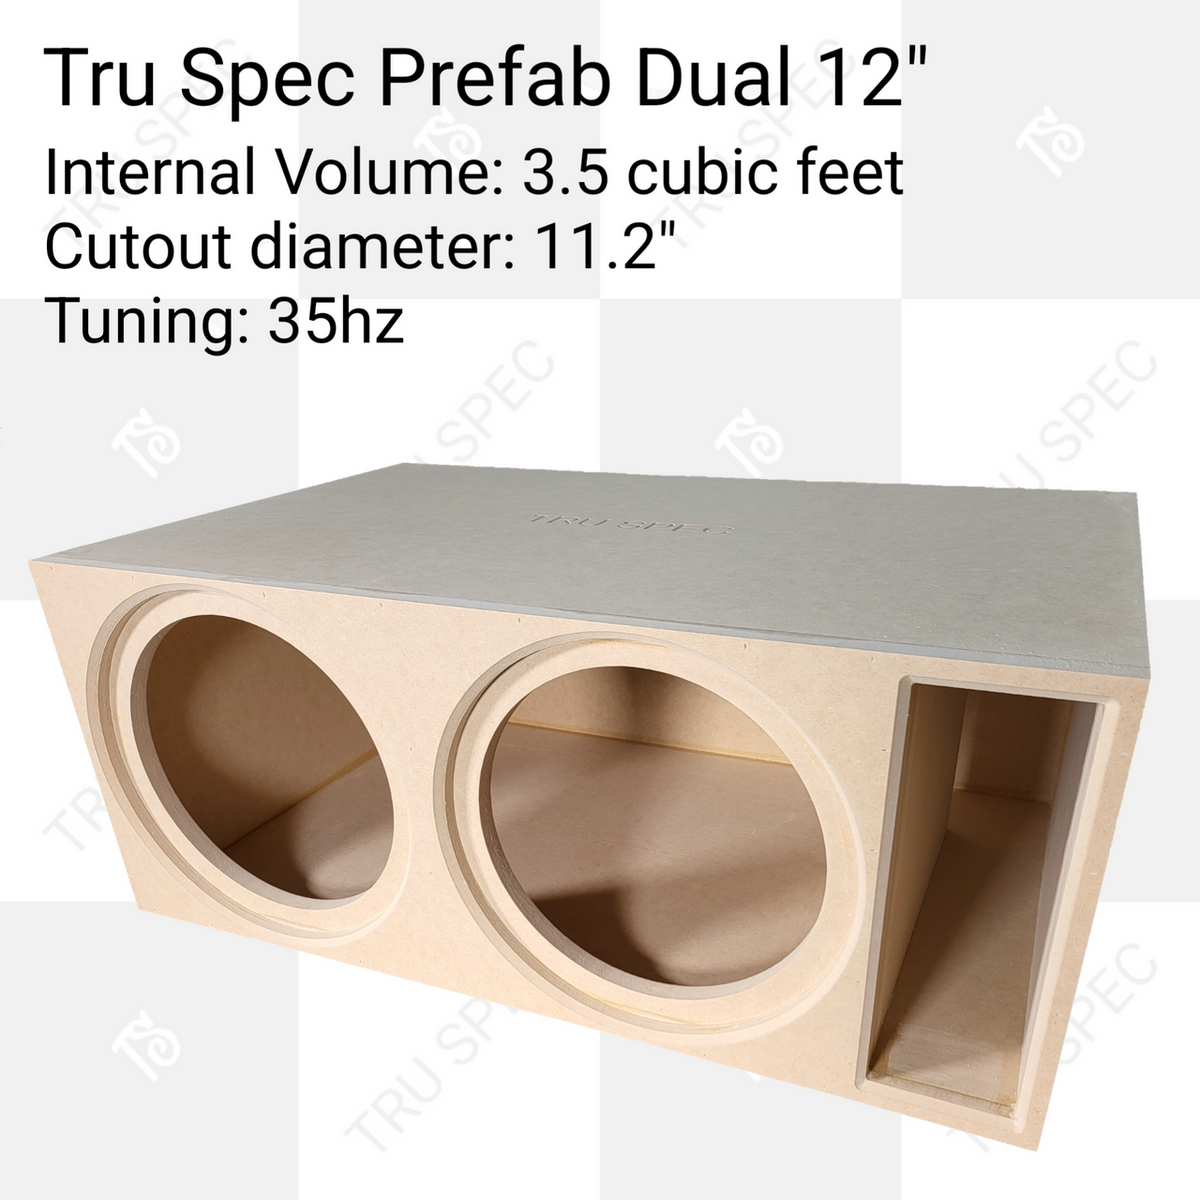 TRU SPEC Prefab Dual 12 Subwoofer Enclosure Sundown SA 12v2